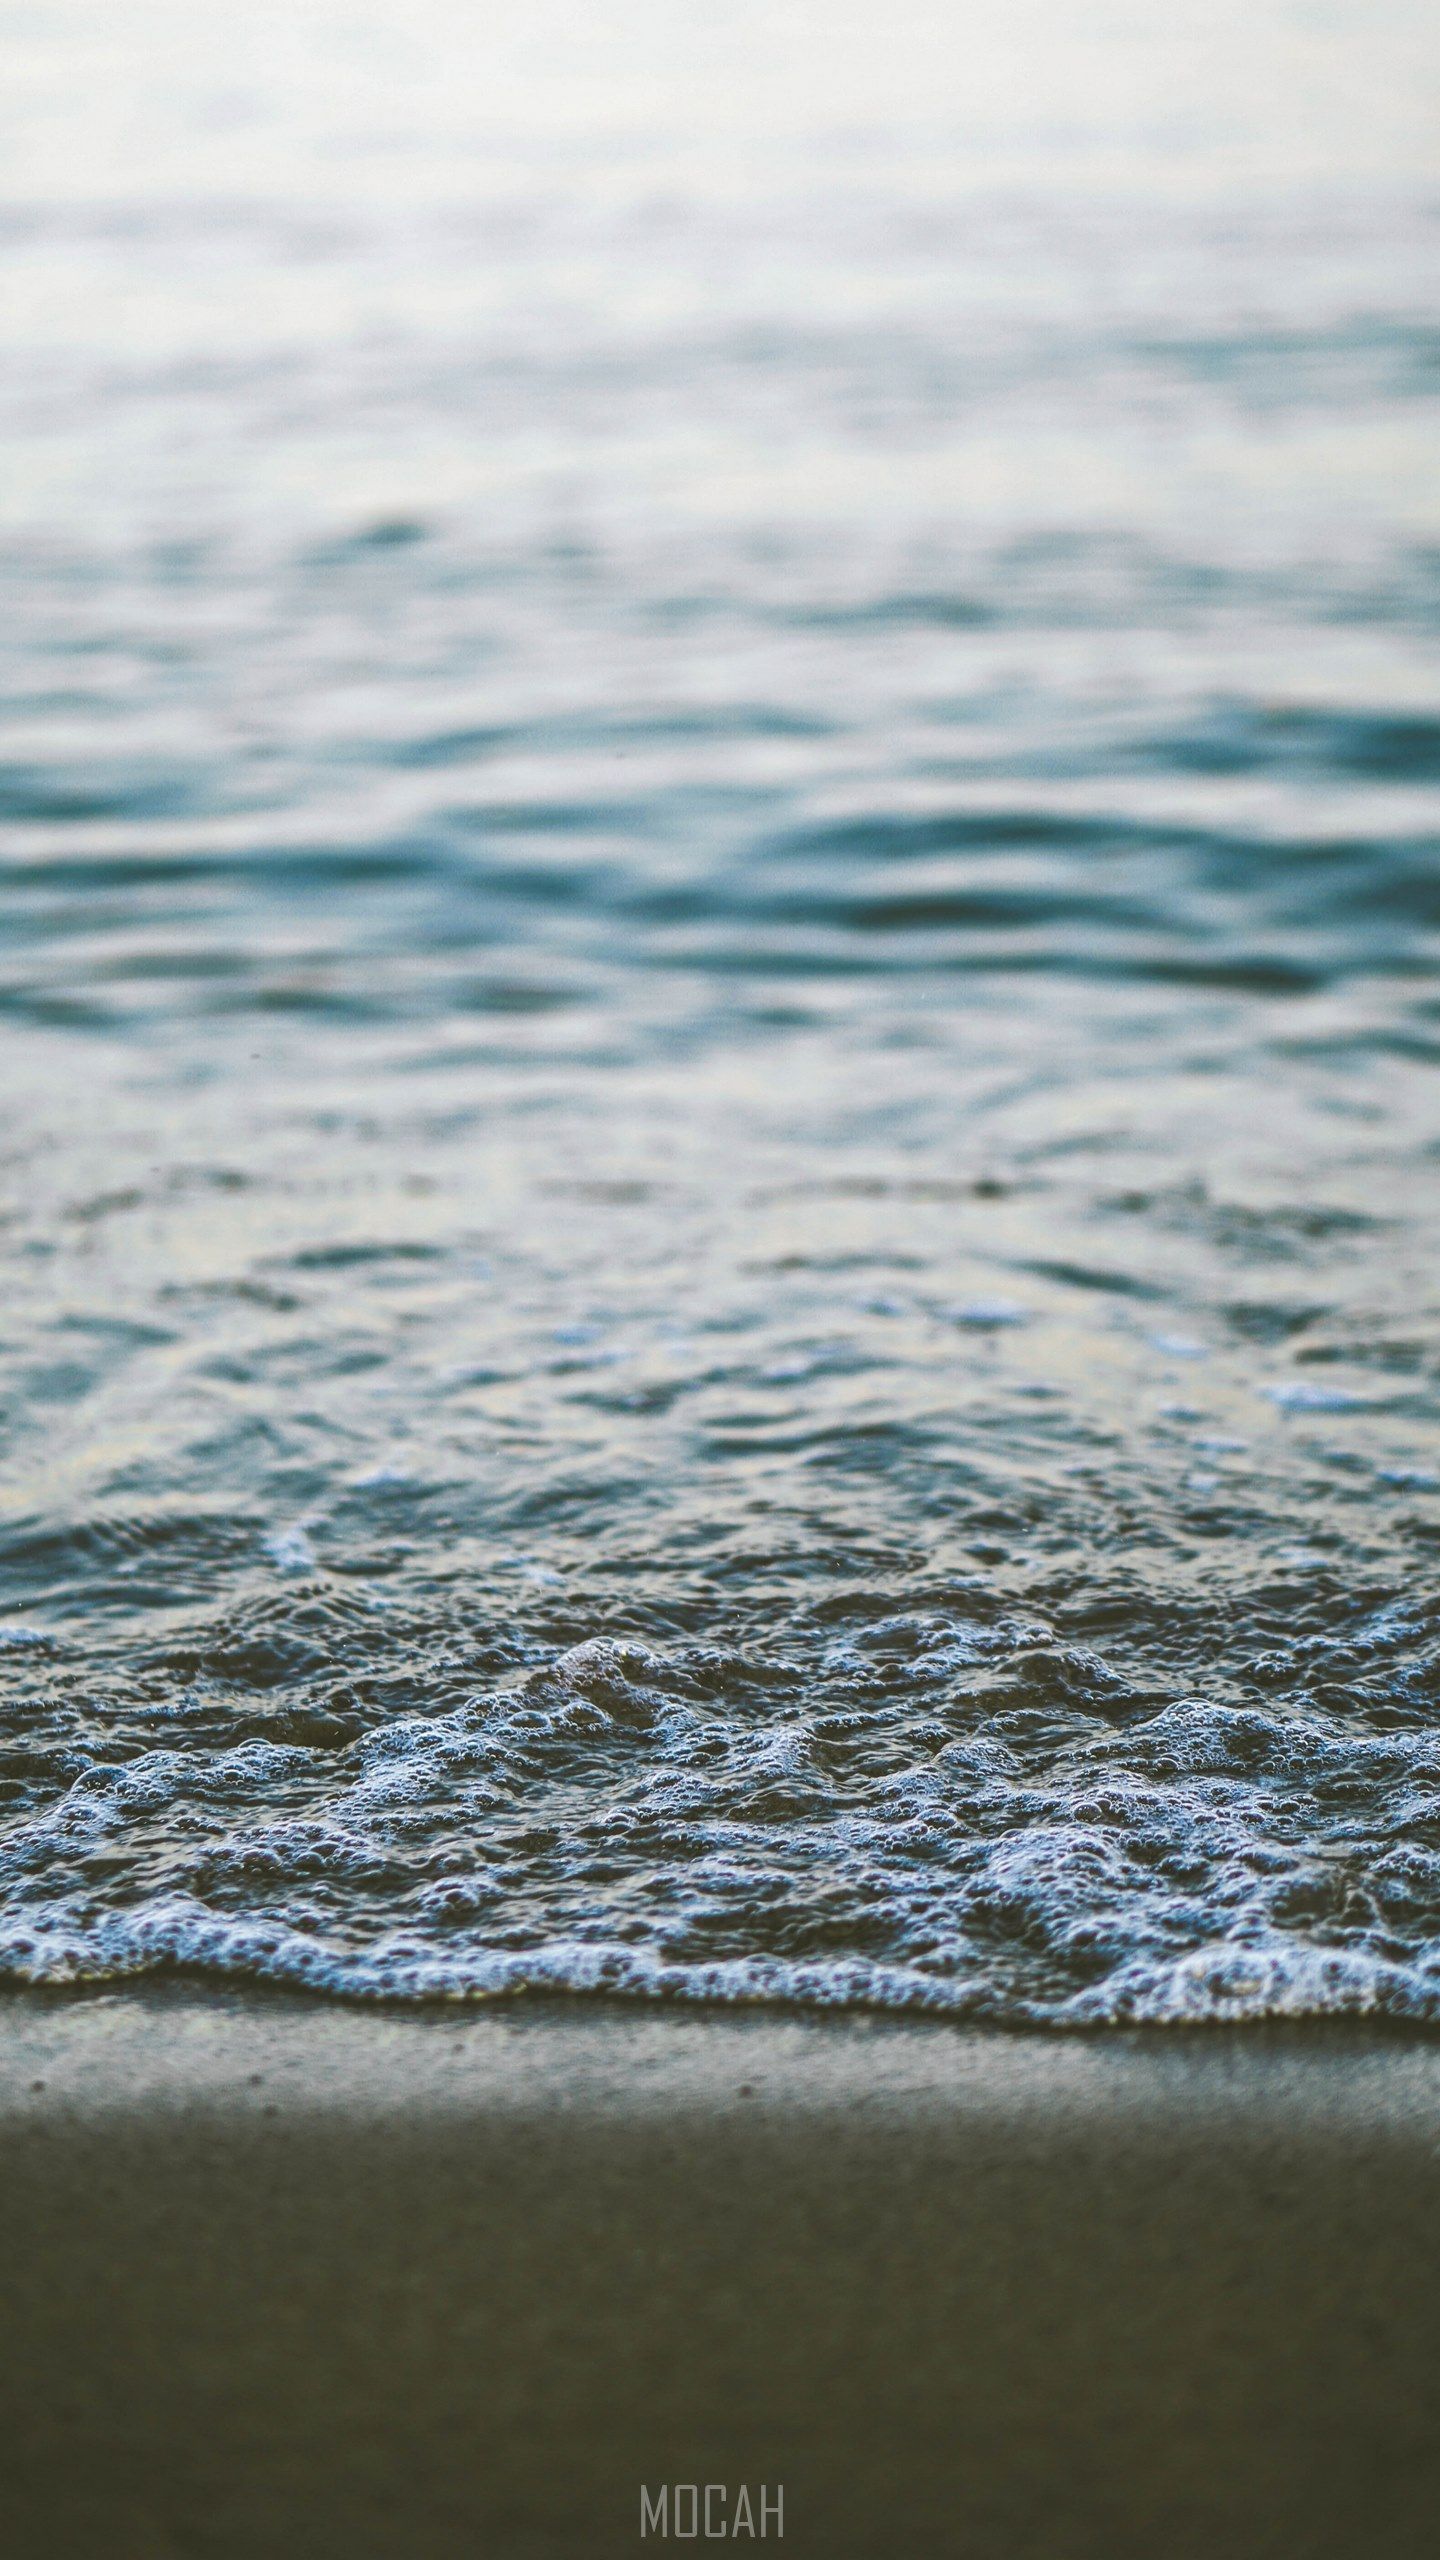 sea wave coast and water hd, LG G3 wallpaper HD download, 1440x2560 Gallery HD Wallpaper